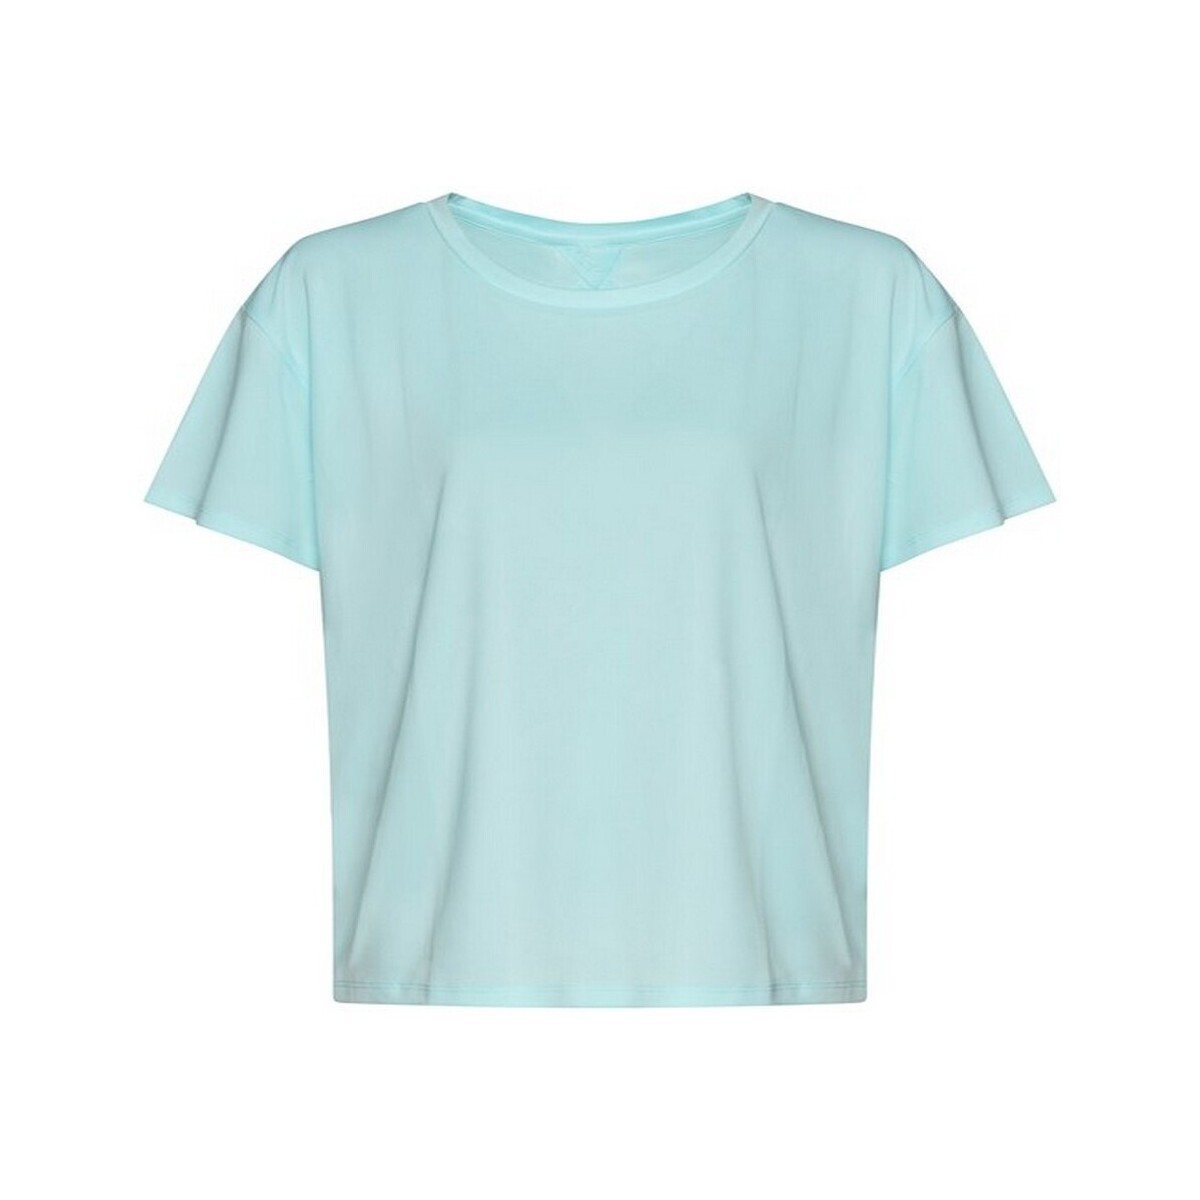 Vêtements Femme T-shirts manches longues Awdis RW8781 Bleu